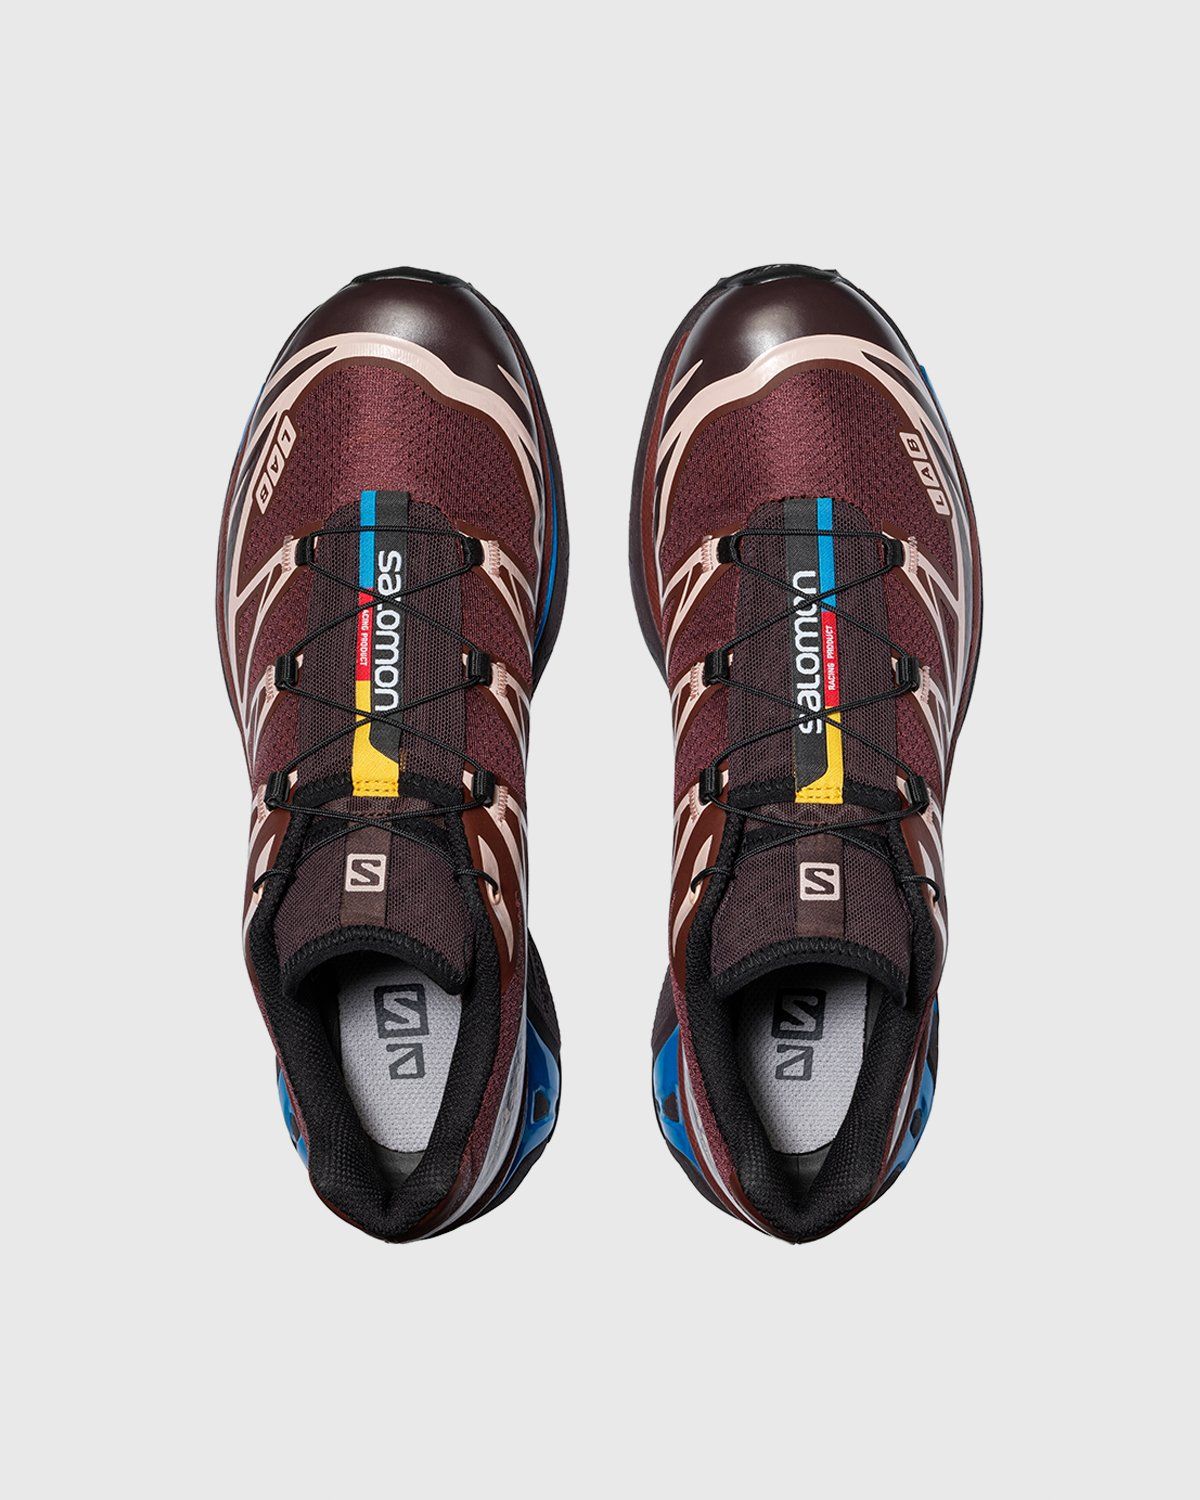 Salomon – XT-6 Advanced Brown - Low Top Sneakers - Brown - Image 4